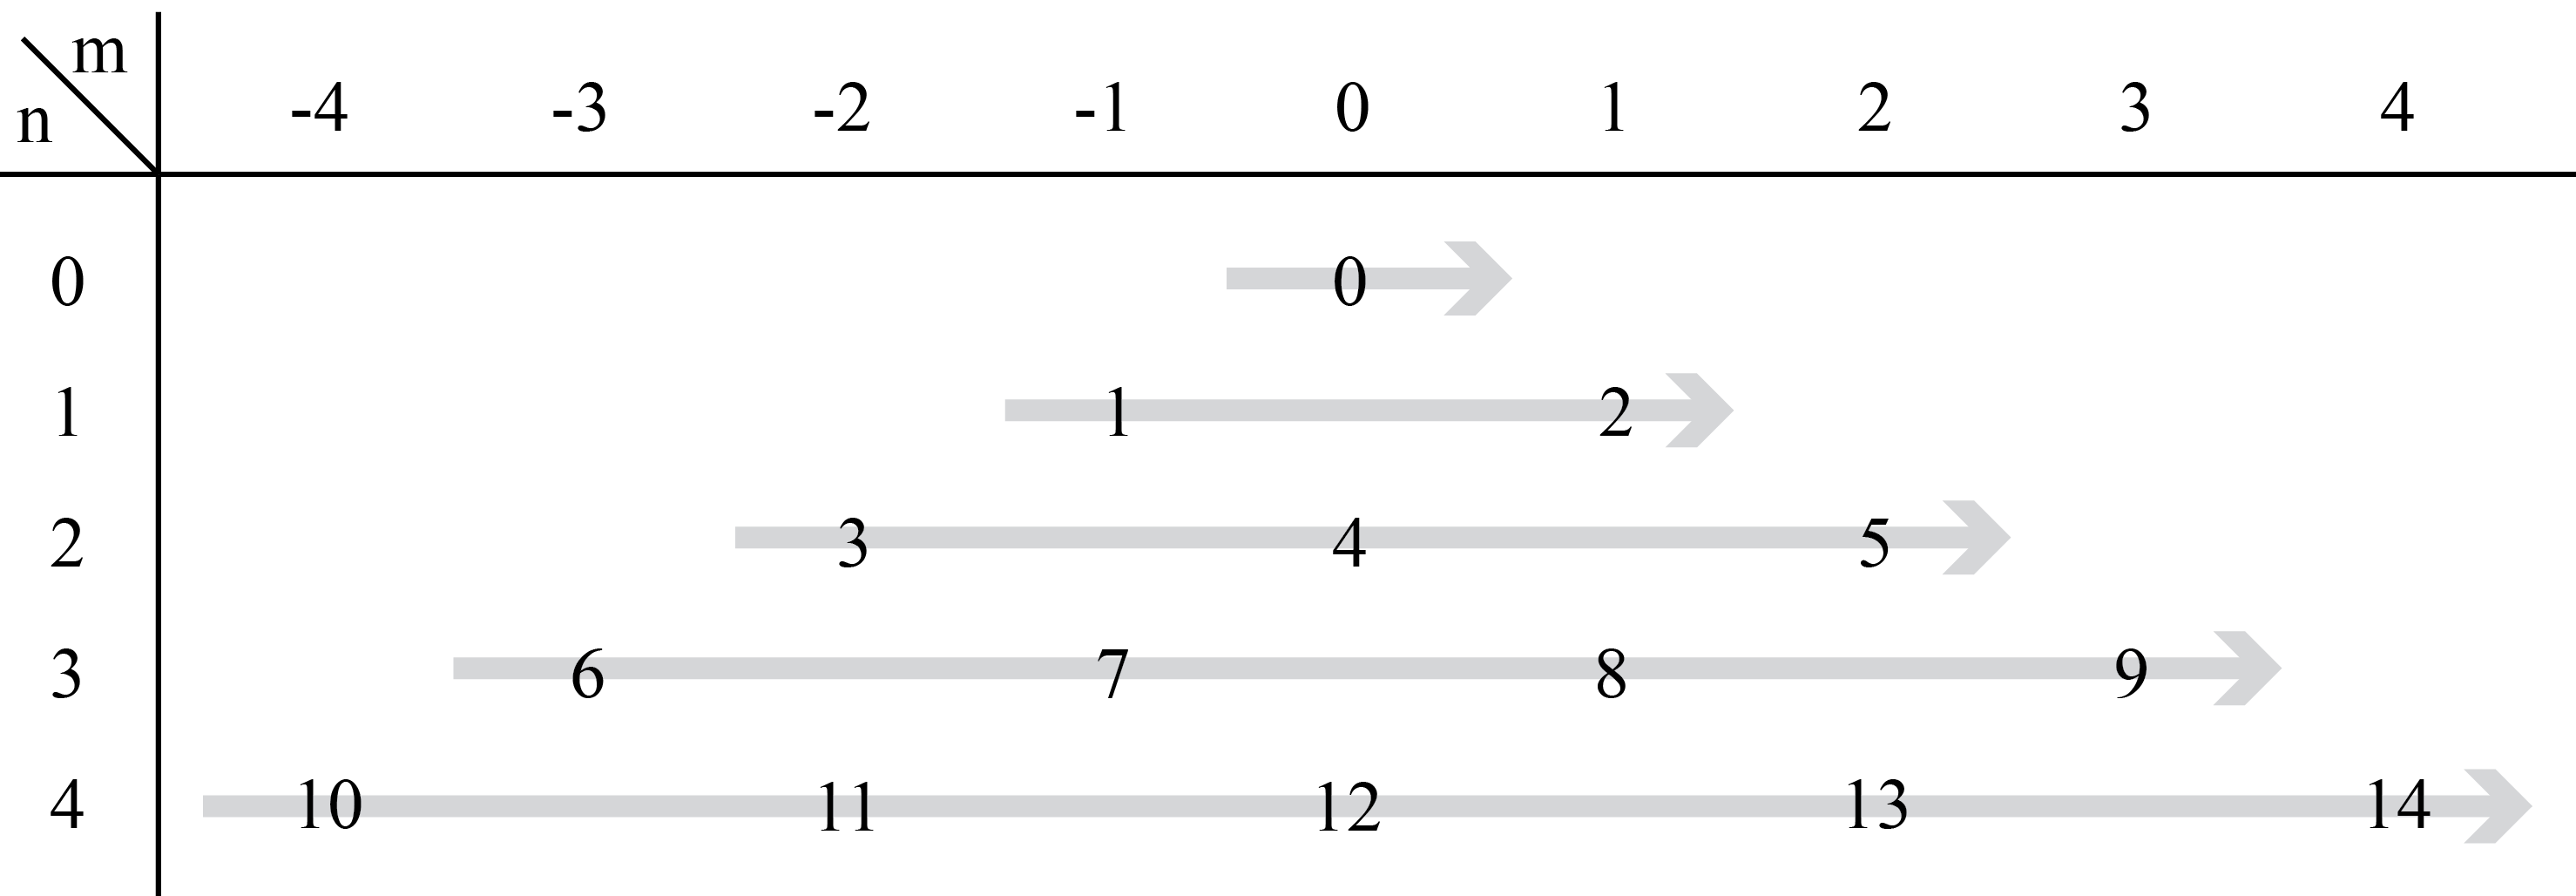 Focal shift diagram